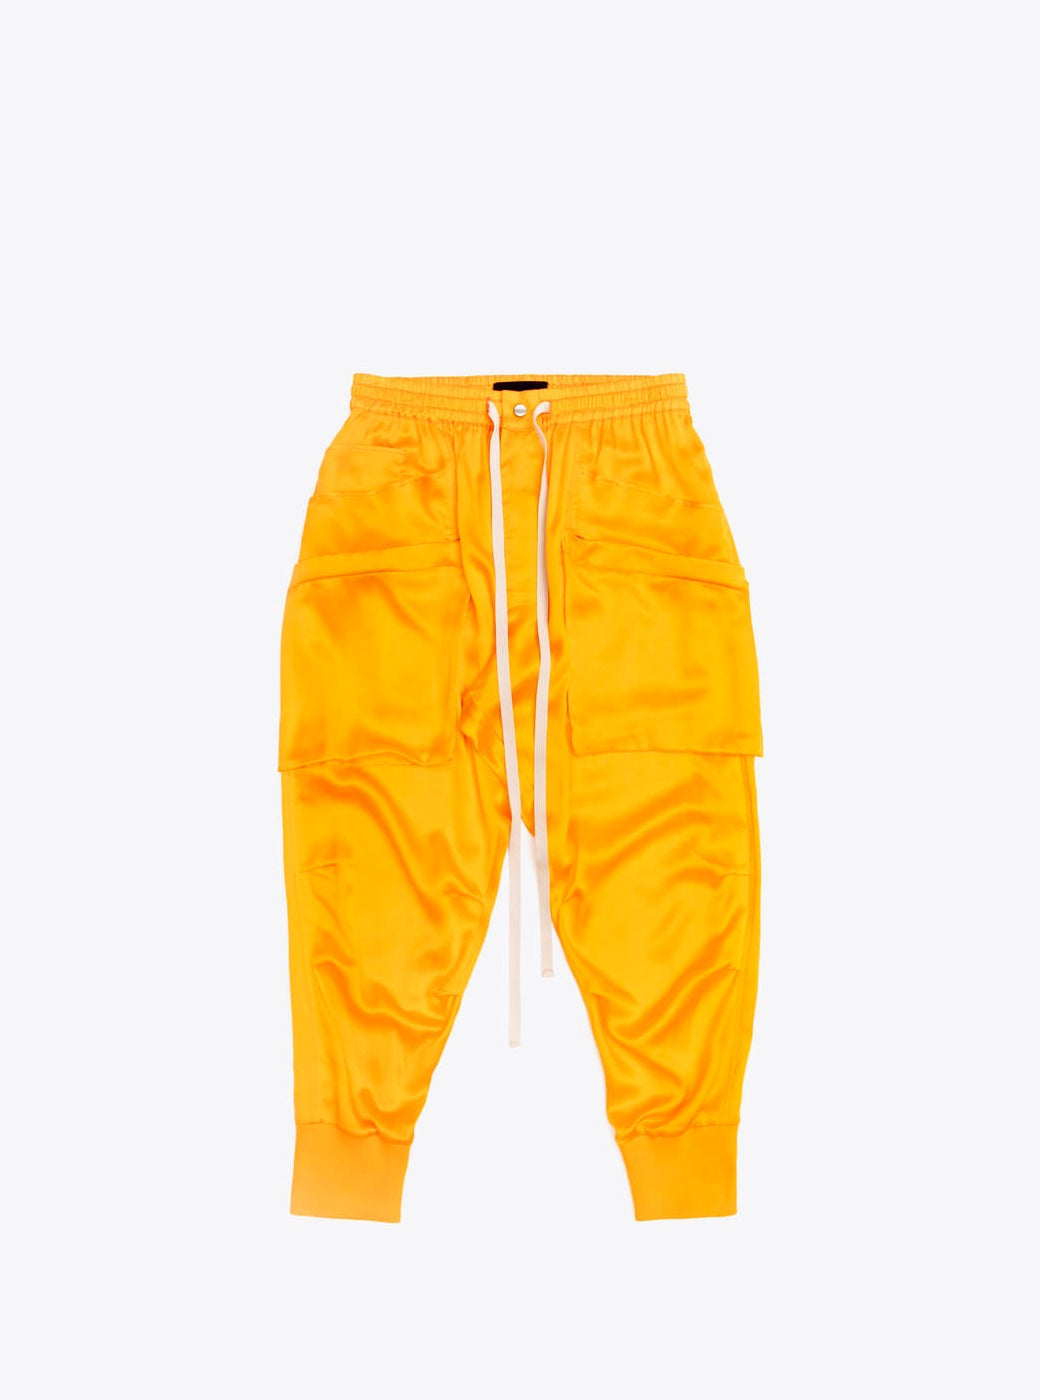 Pants 998 Marigold